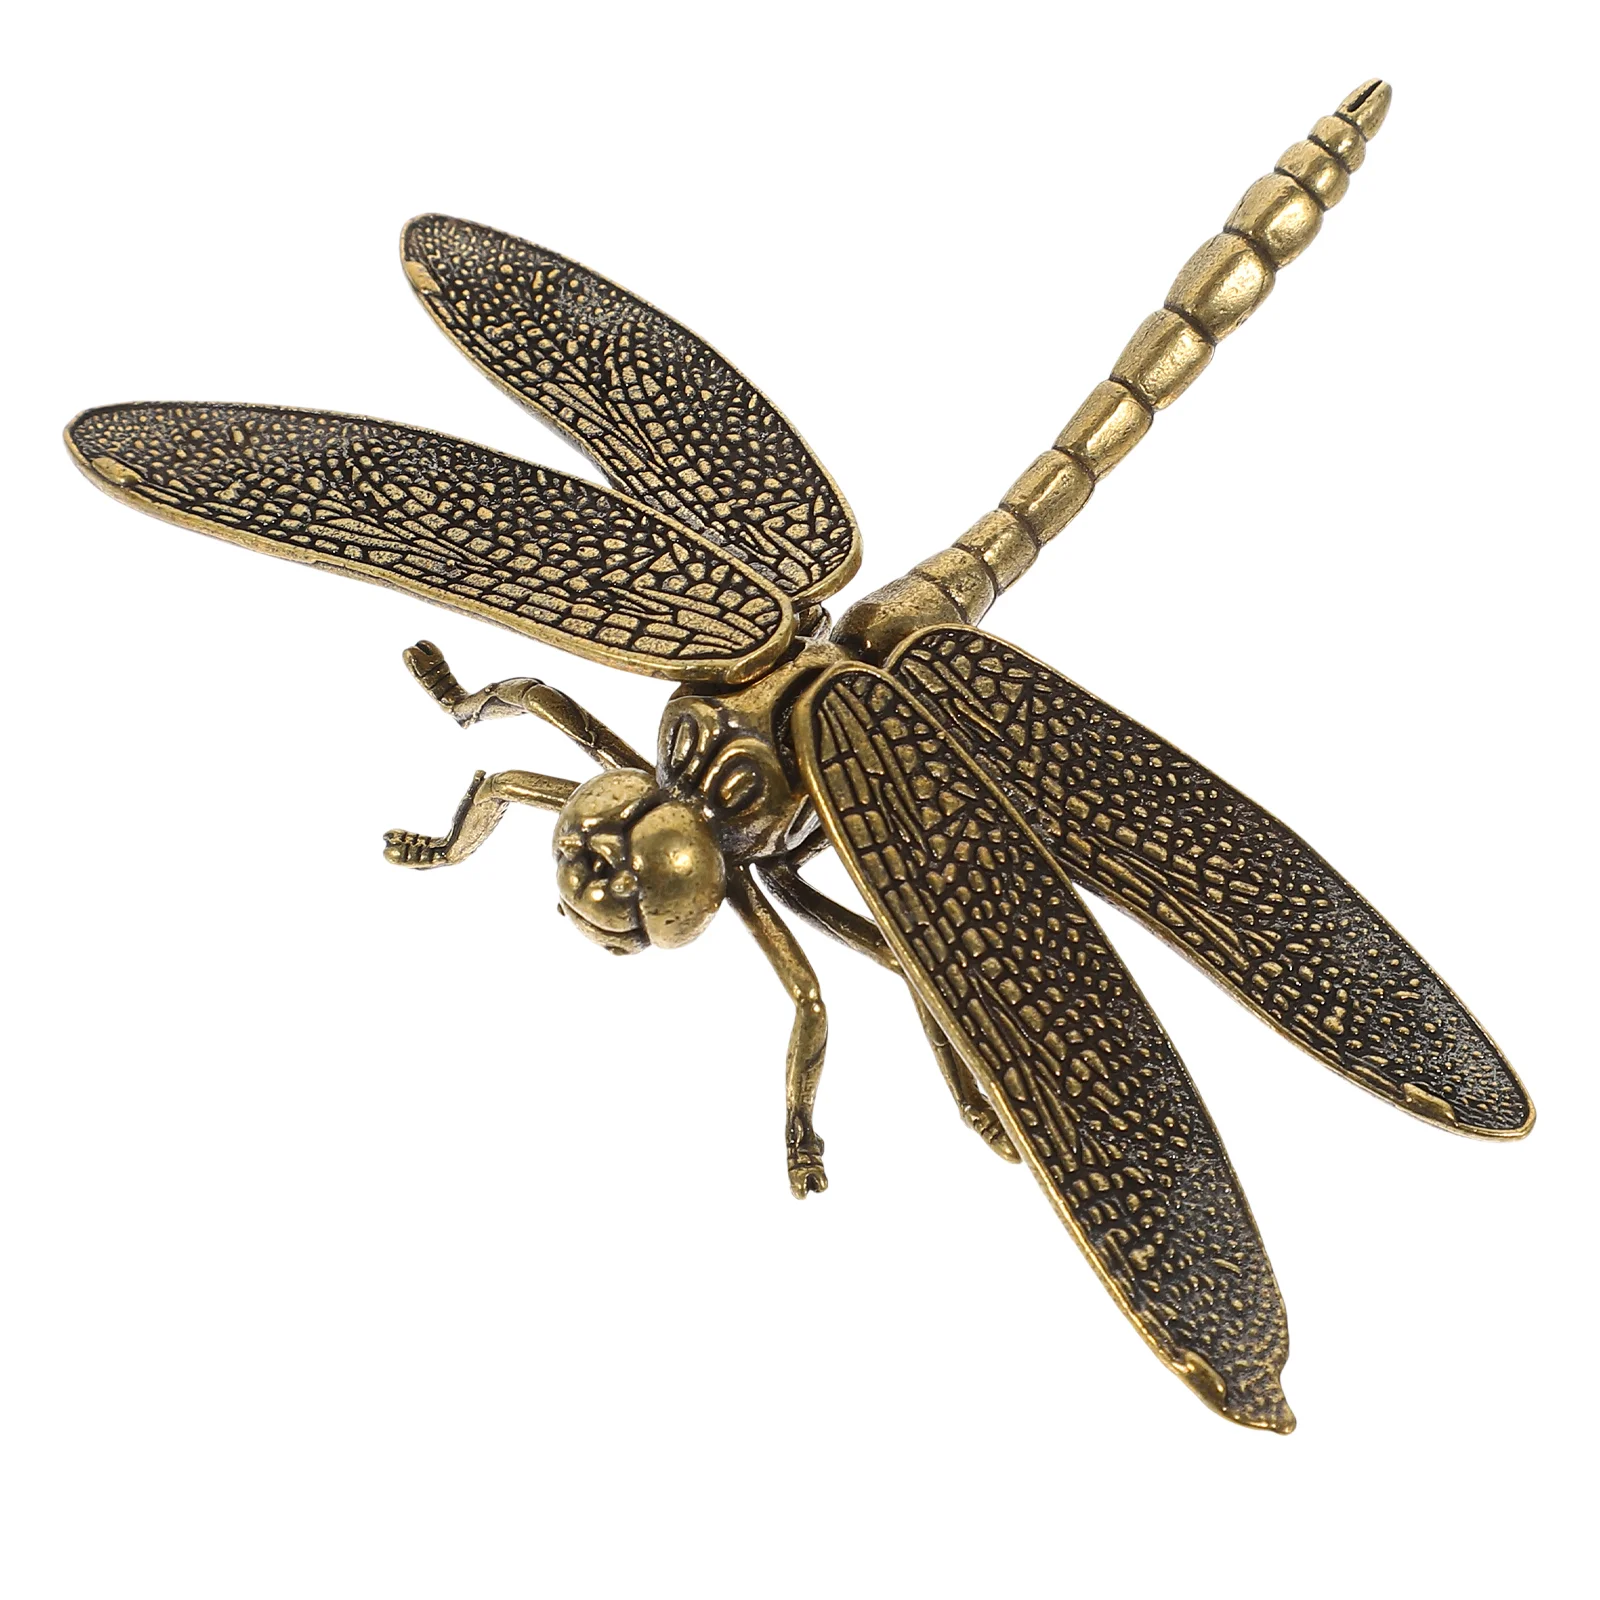 

Dragonfly Figurines Household Decor Desktop Ornament Crafts Adornment Brass Toy Creative Metal Decoration Curiosity cabinet